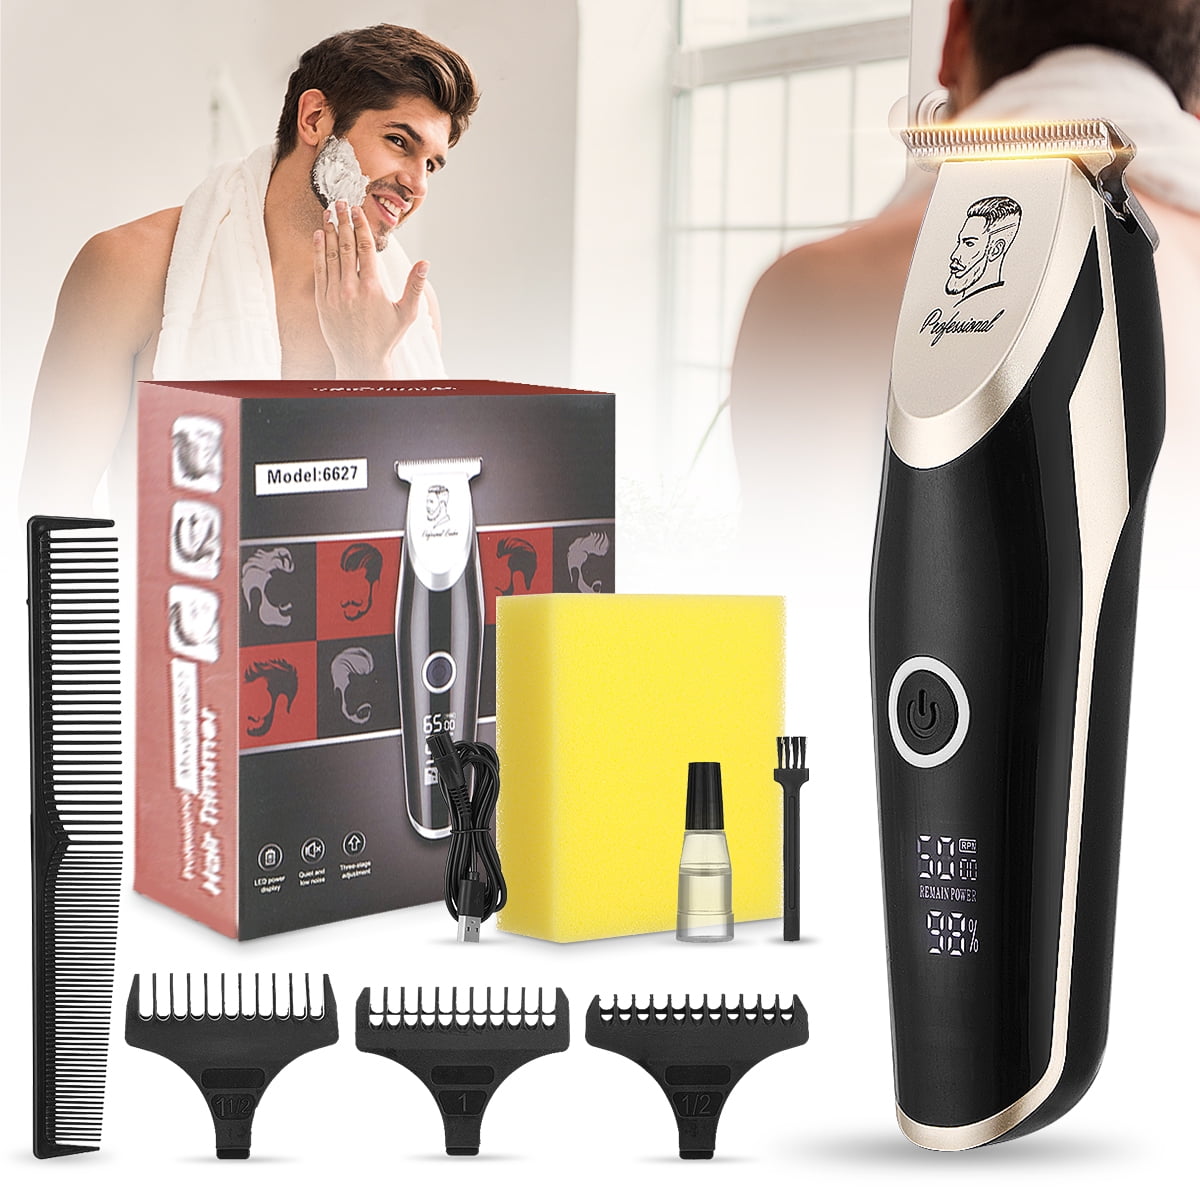 Men's Beard Trimmer - Cordless Hair Clippers - LED Display Hair Trimmer -  Professional Barber Shaving Grooming Machine Haircut Kit for Men -  